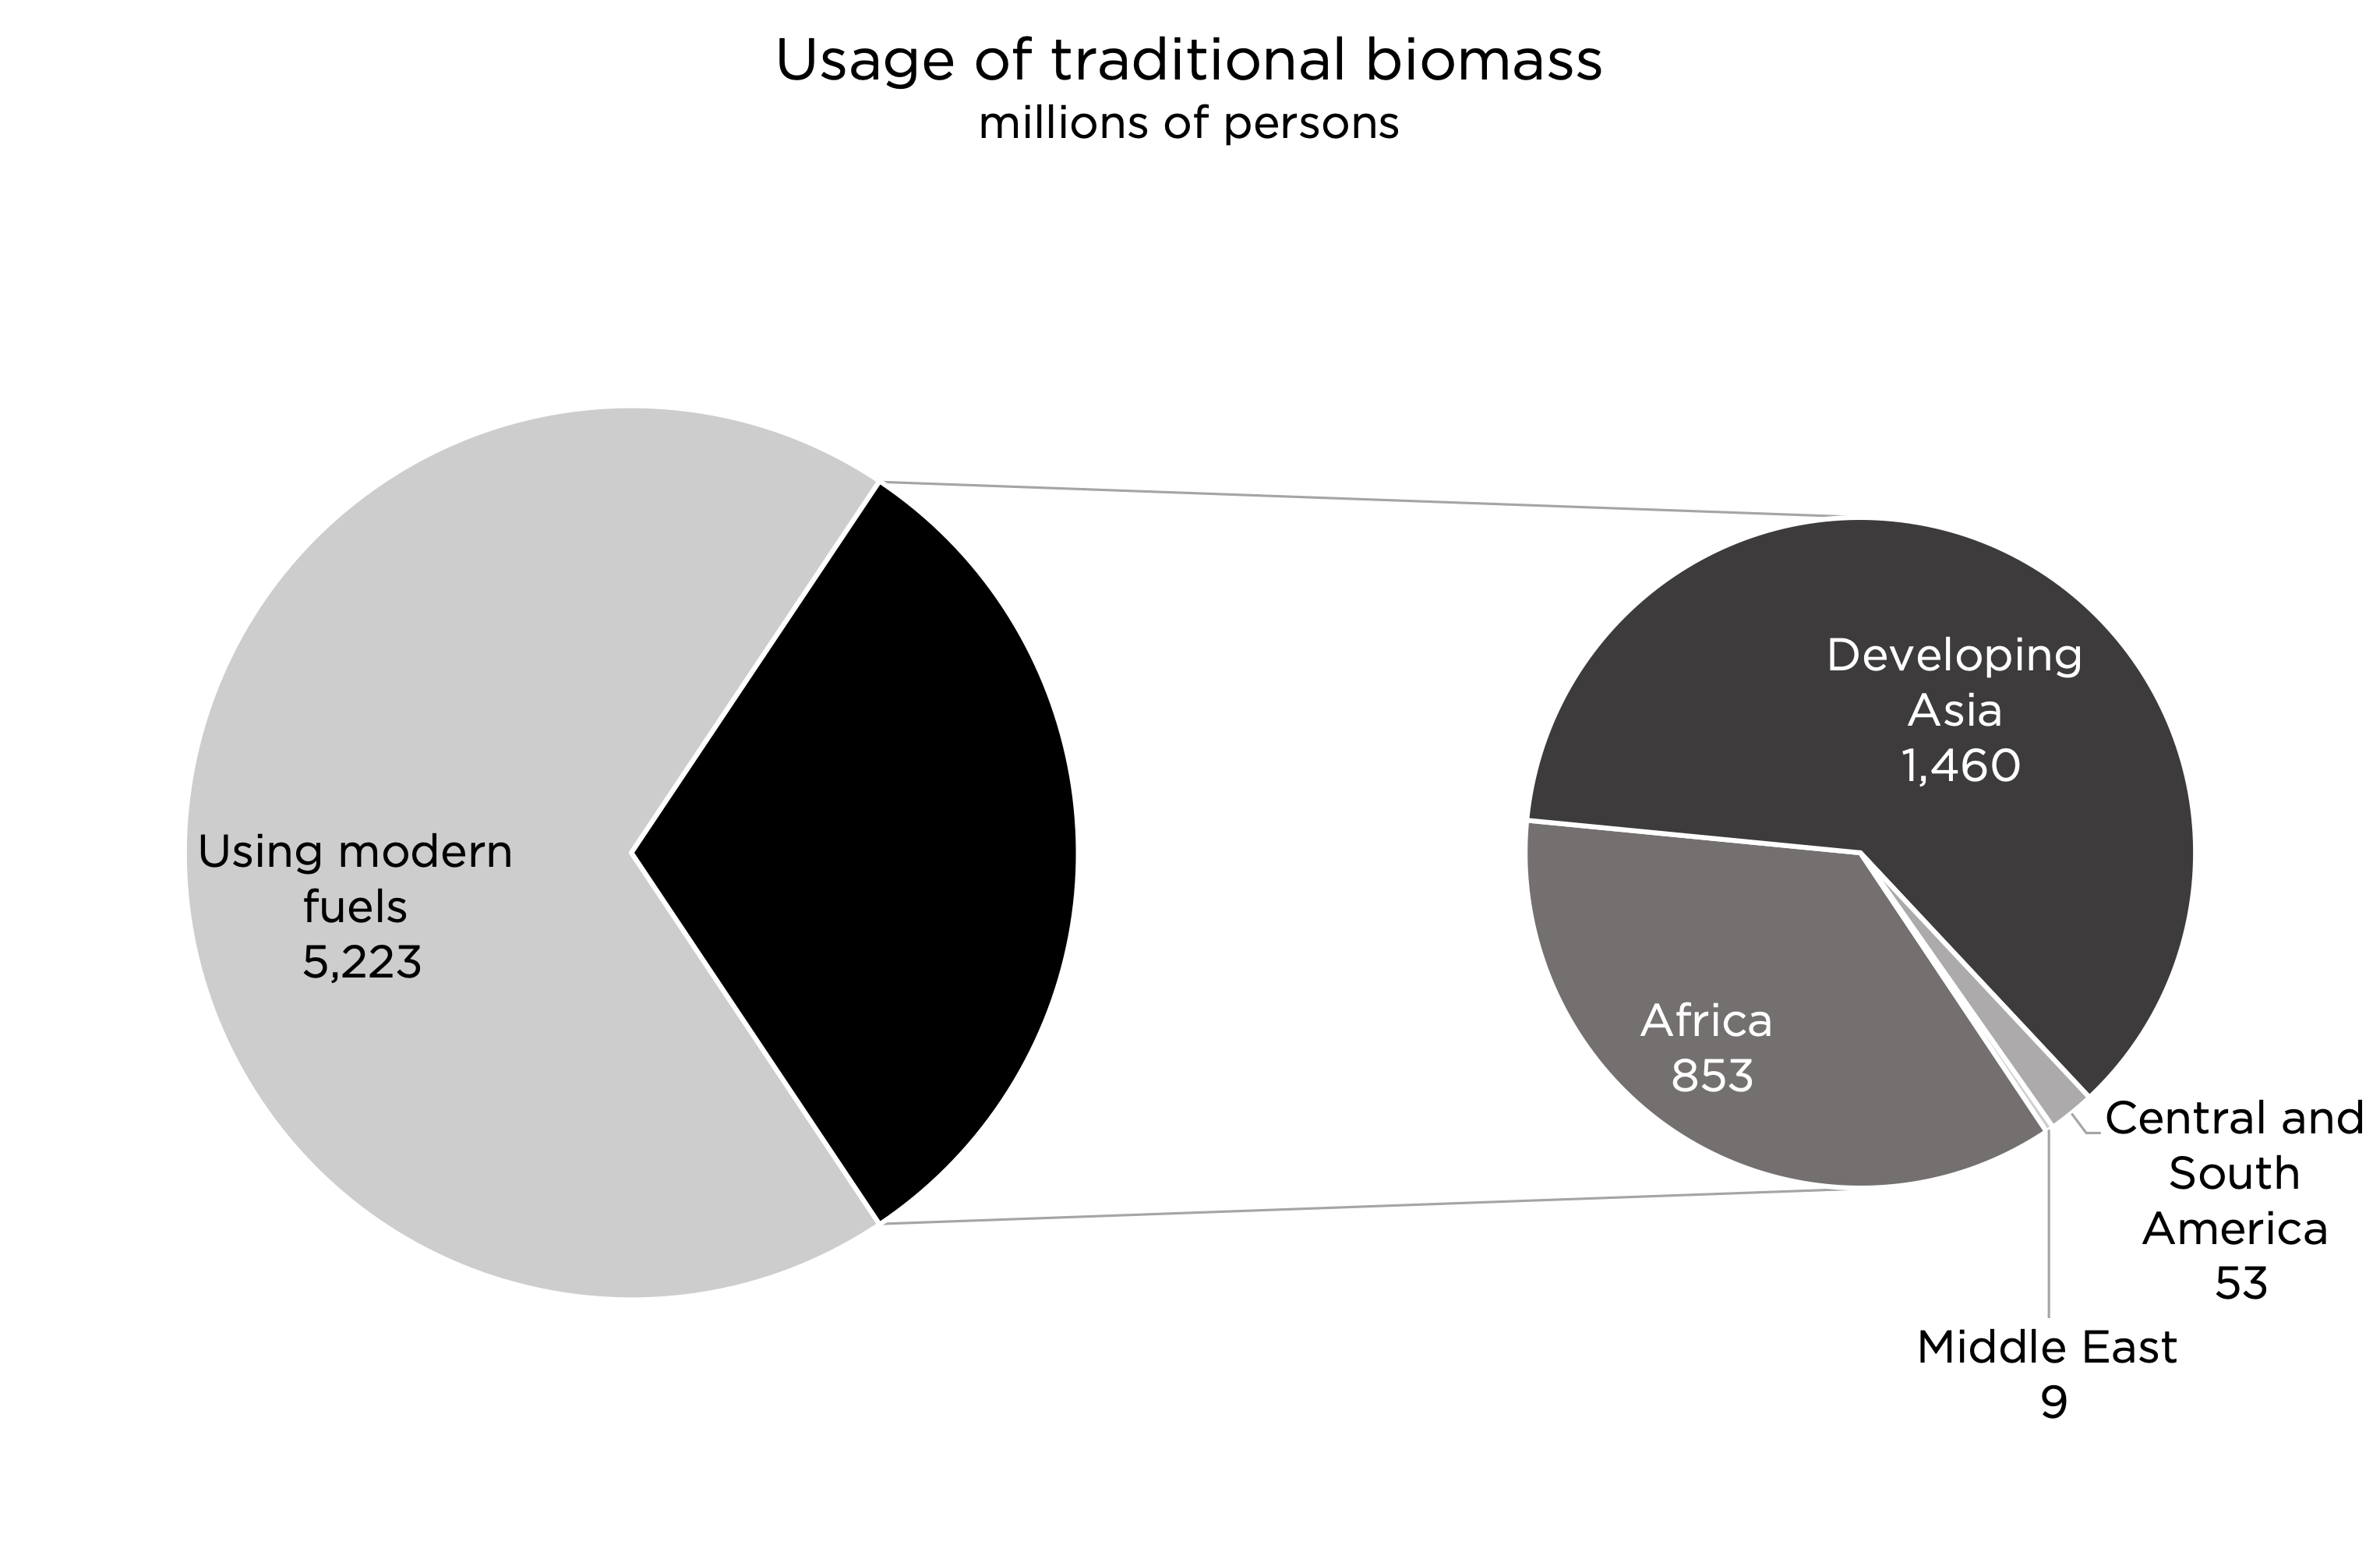 Primitive biomass use